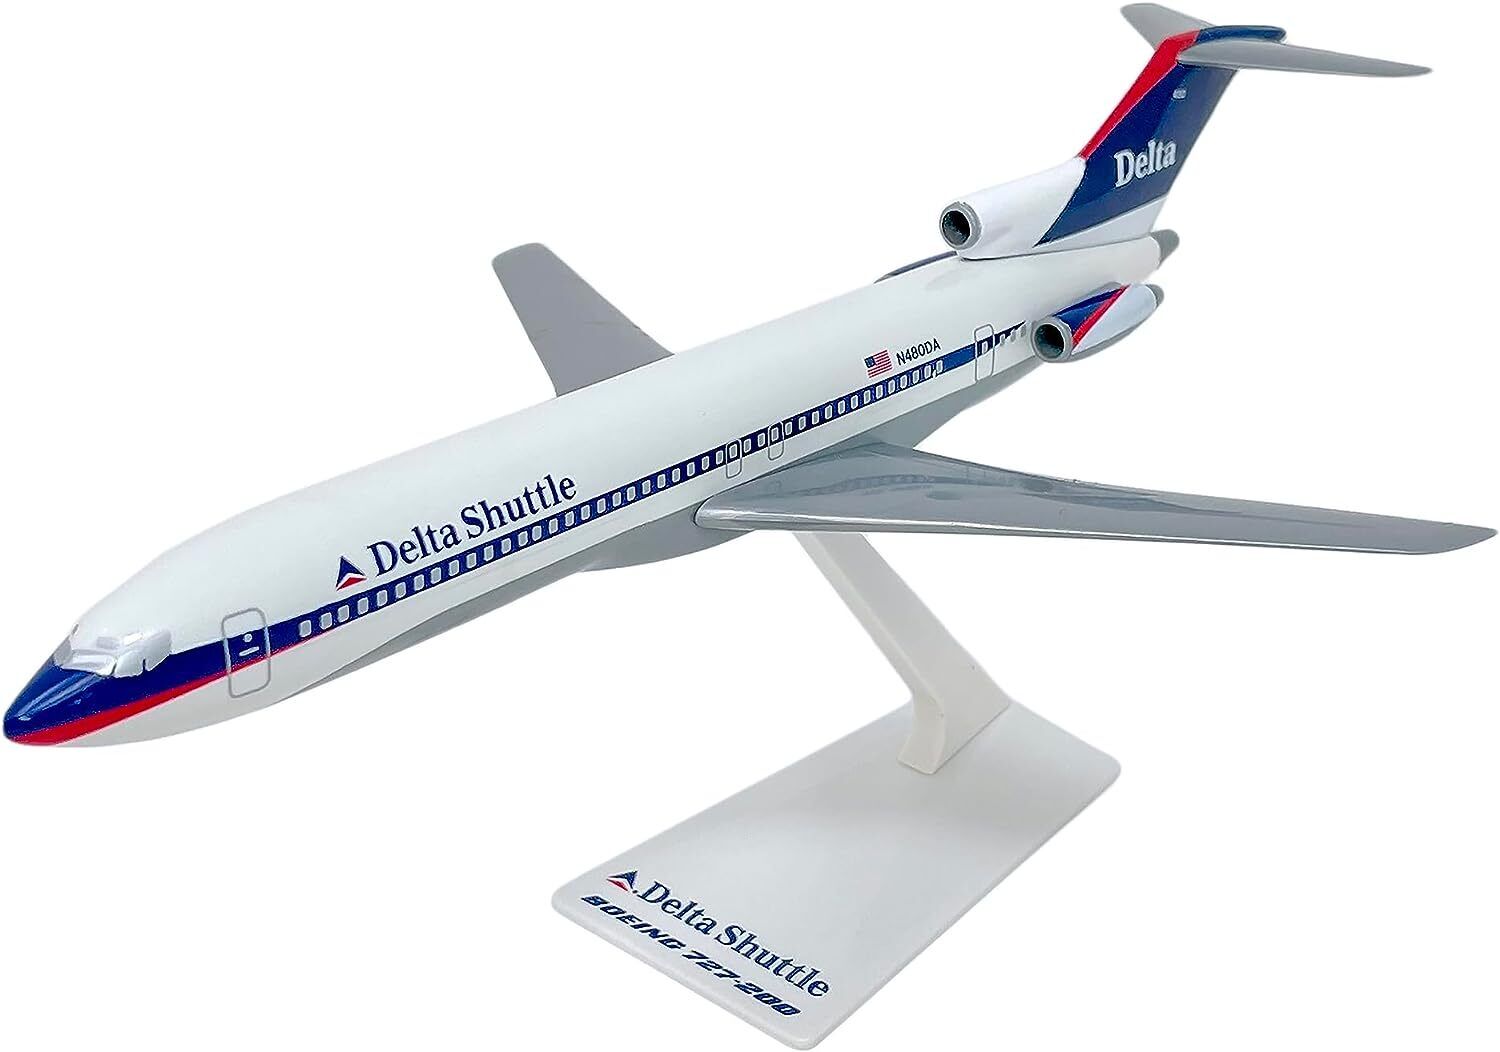 Flight Miniatures Delta Airlines Shuttle B727-200 Desk Top 1/200 Model Airplane